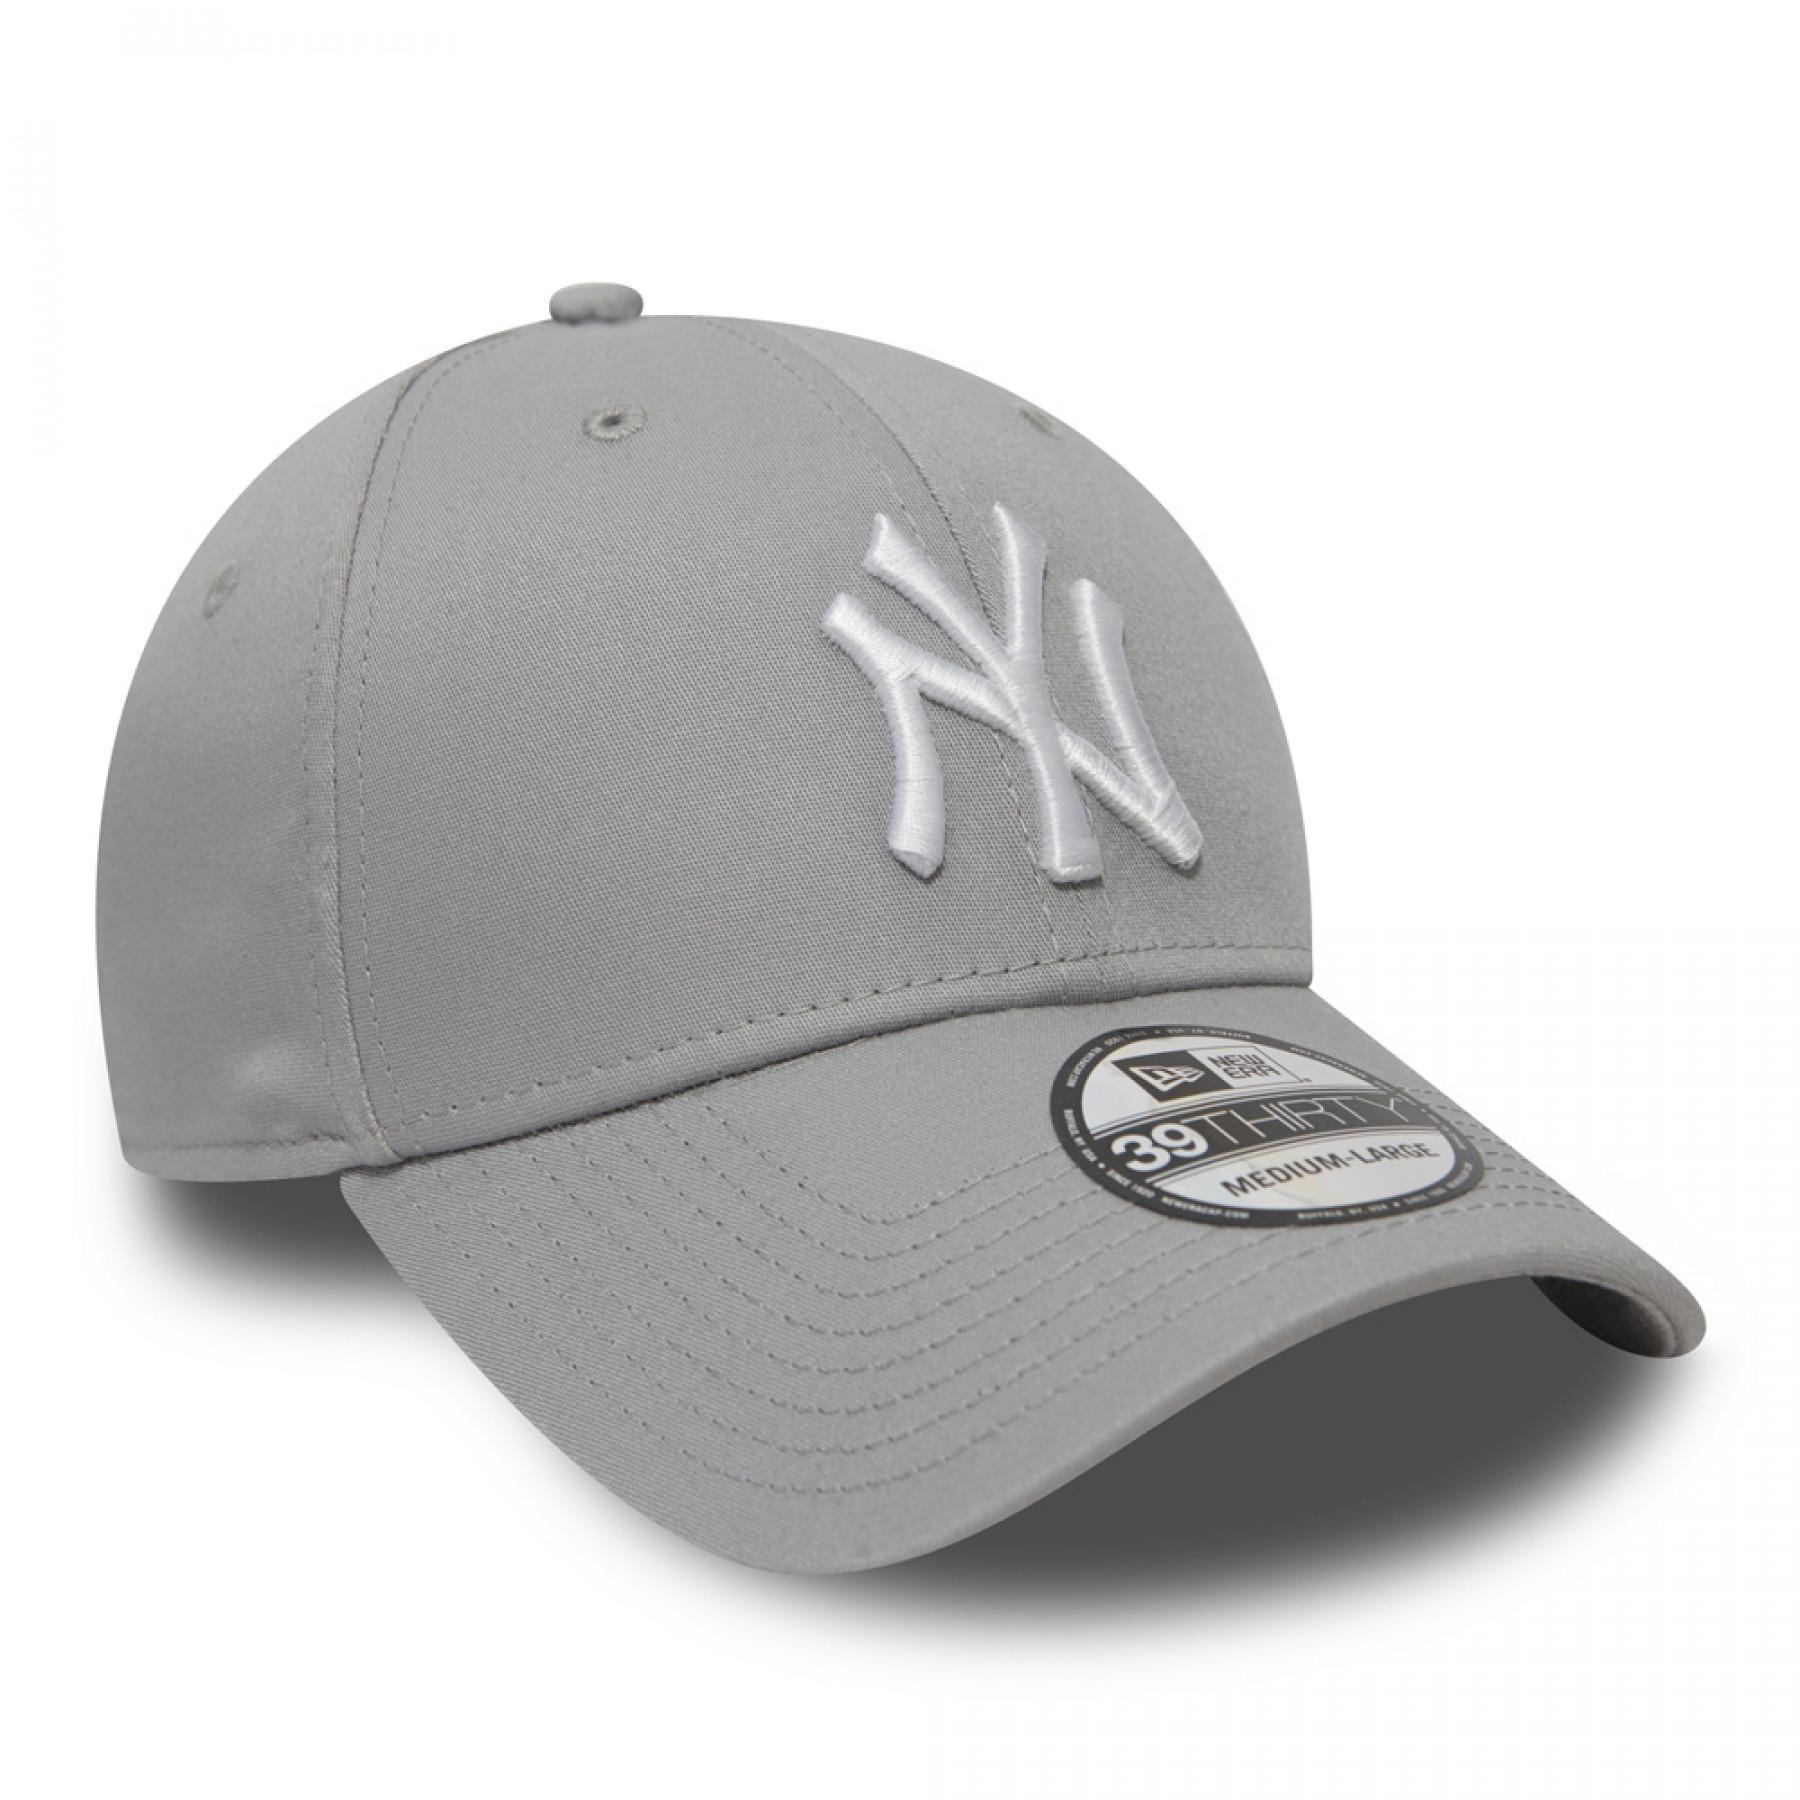 Boné New Era essential 39thirty New York Yankees